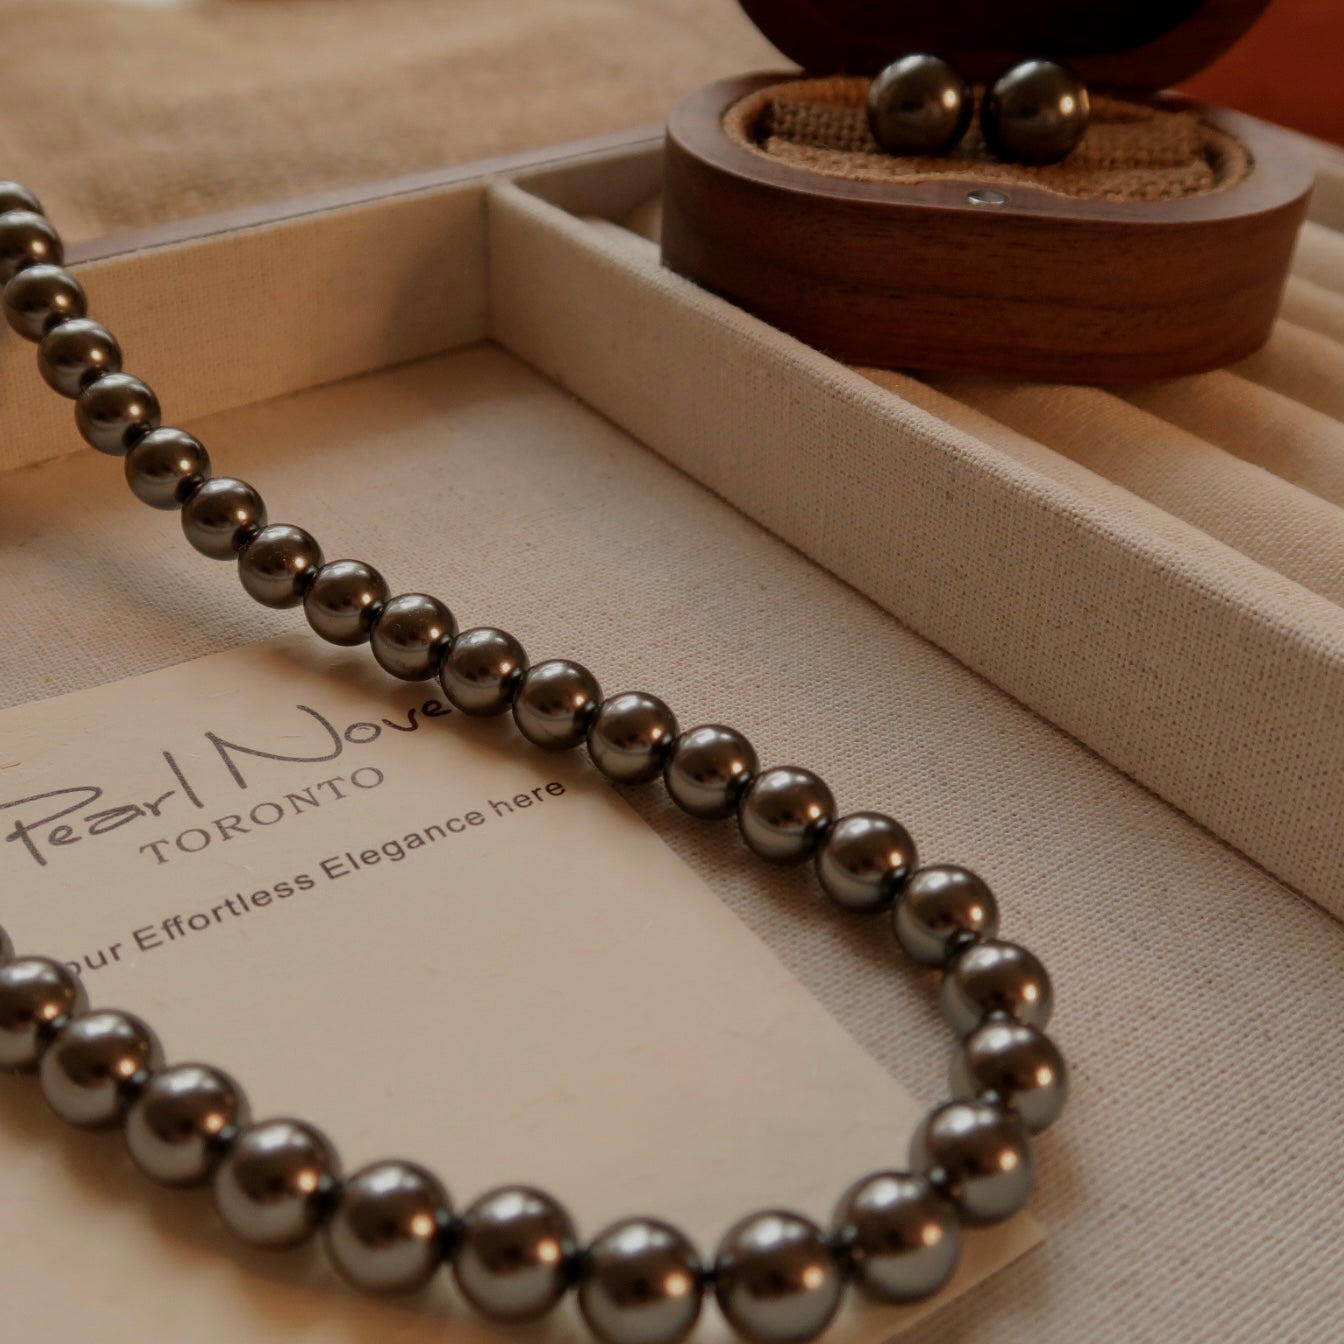 Swarovski pearl chain DM for inquiries | Instagram